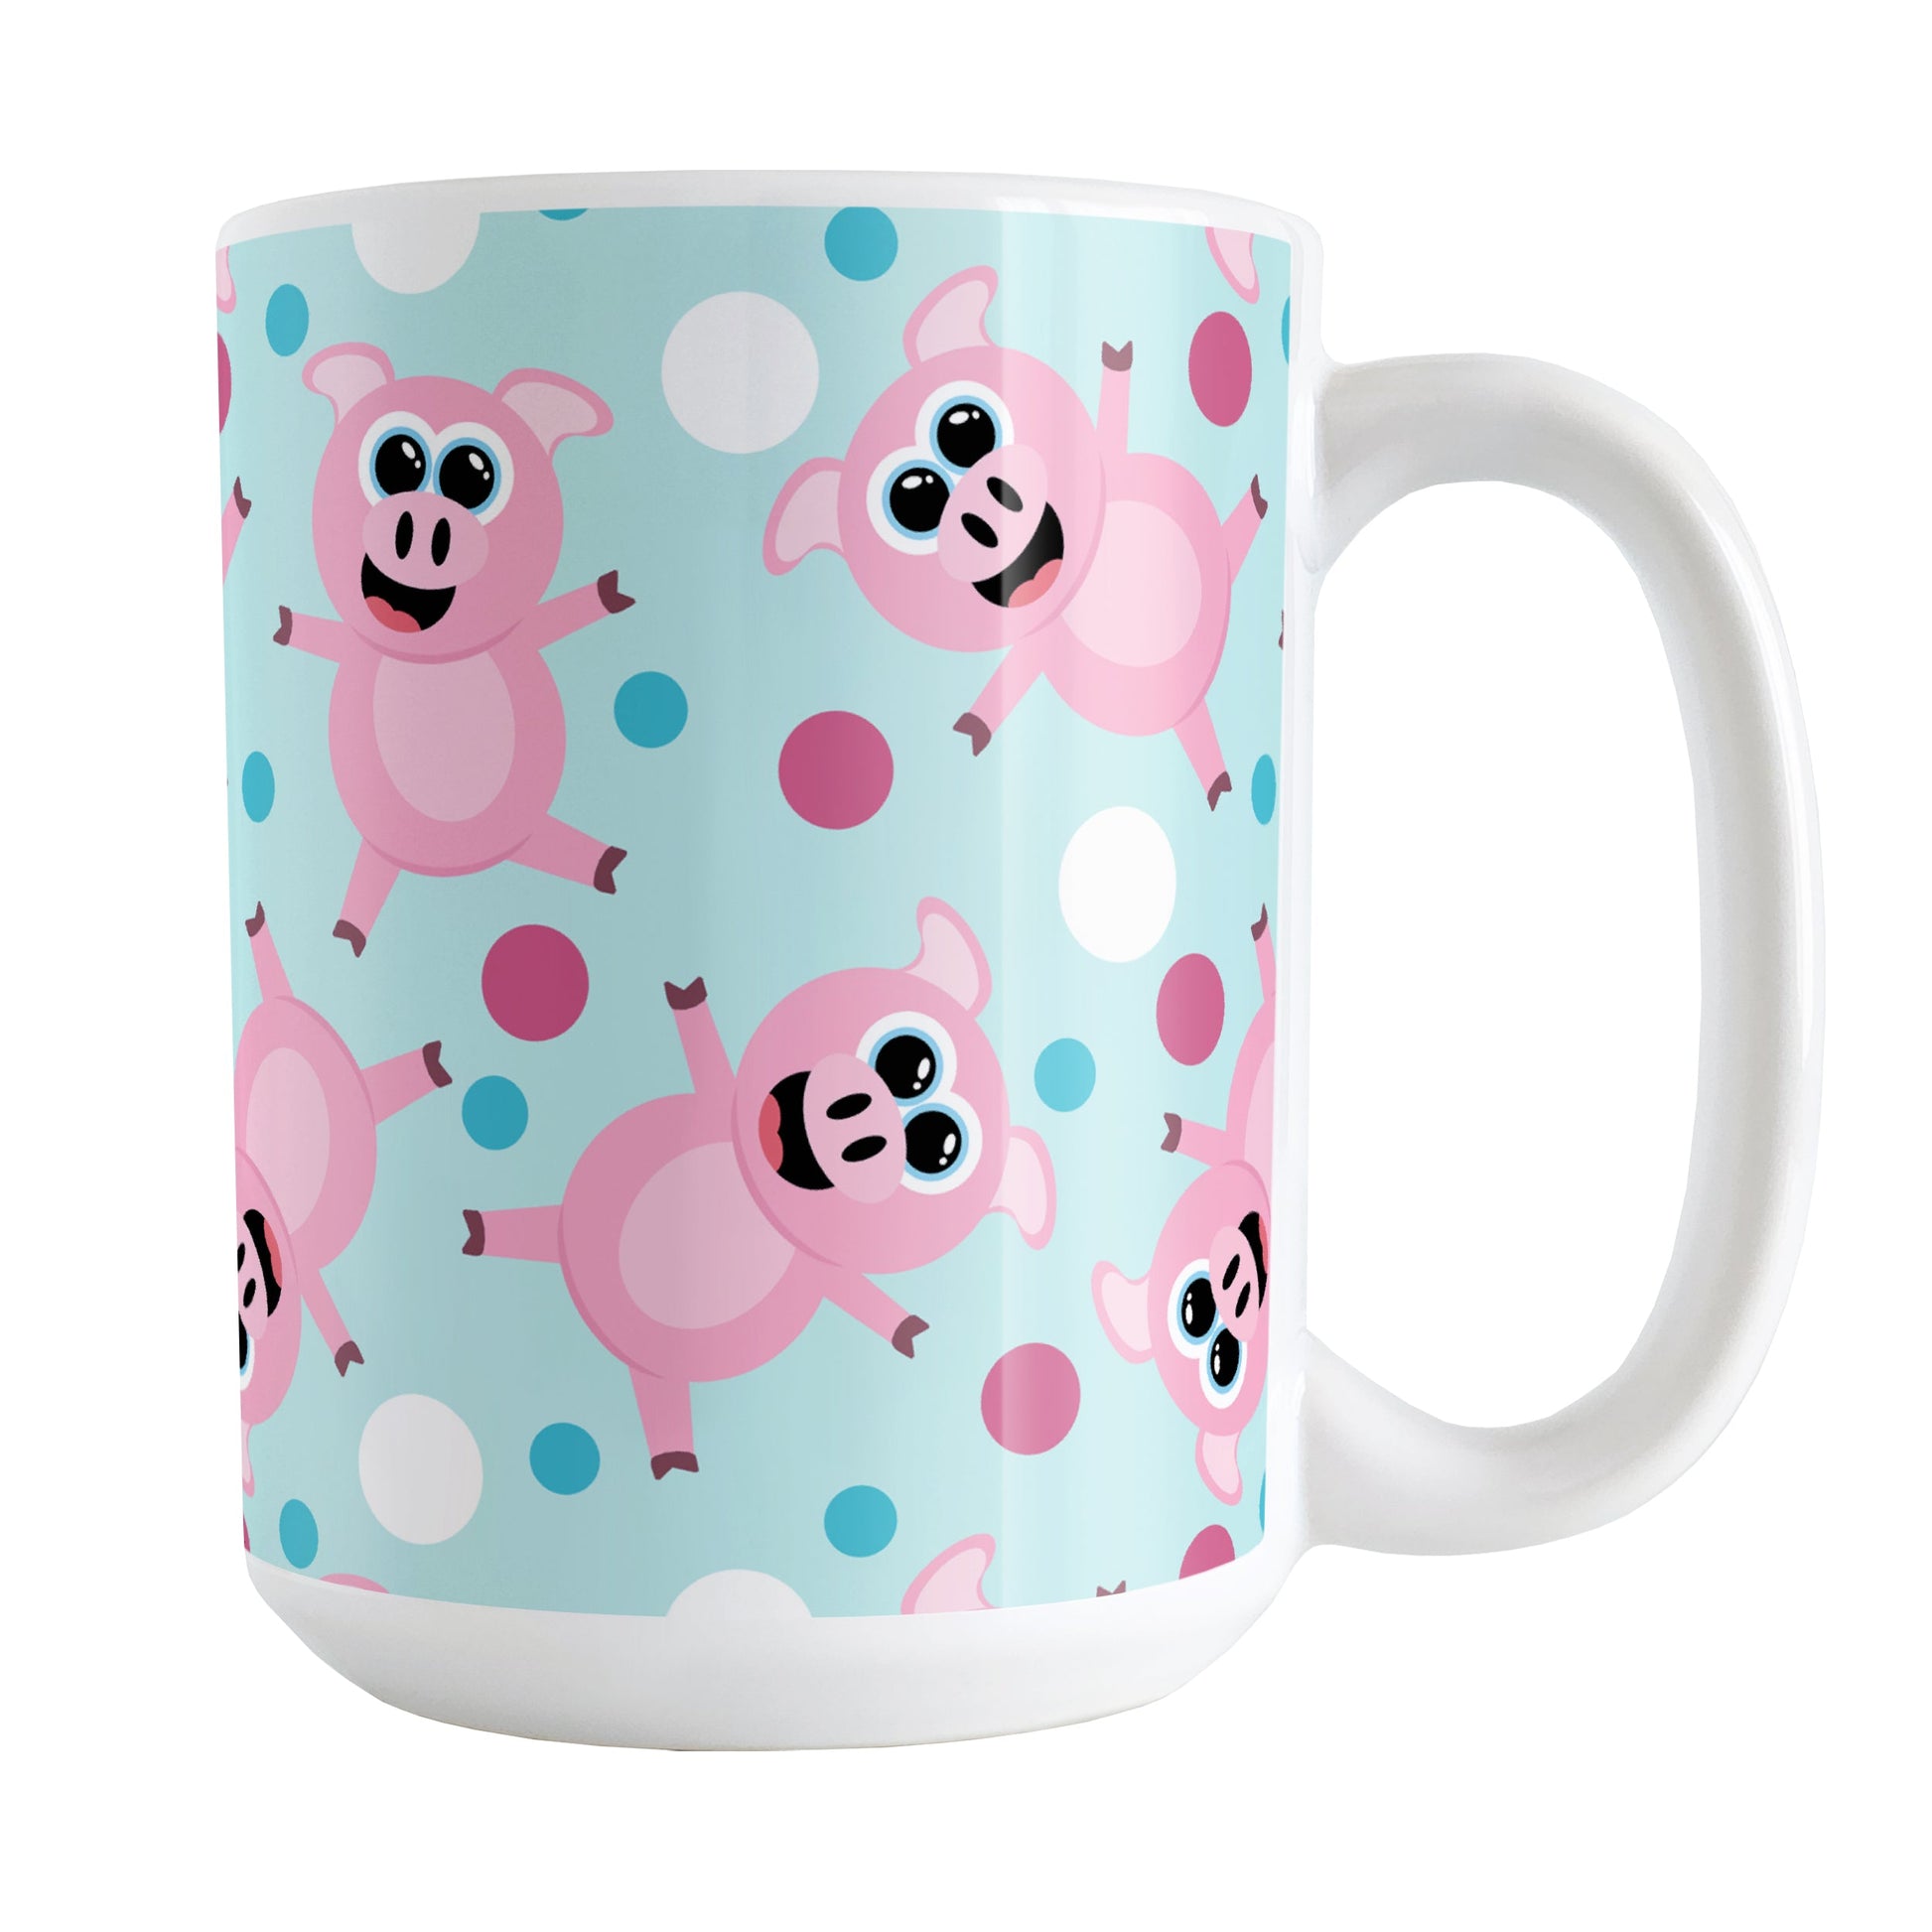 Cartoon Pink and Blue Pattern - Cute Pig Mug (15oz) at Amy's Coffee Mugs